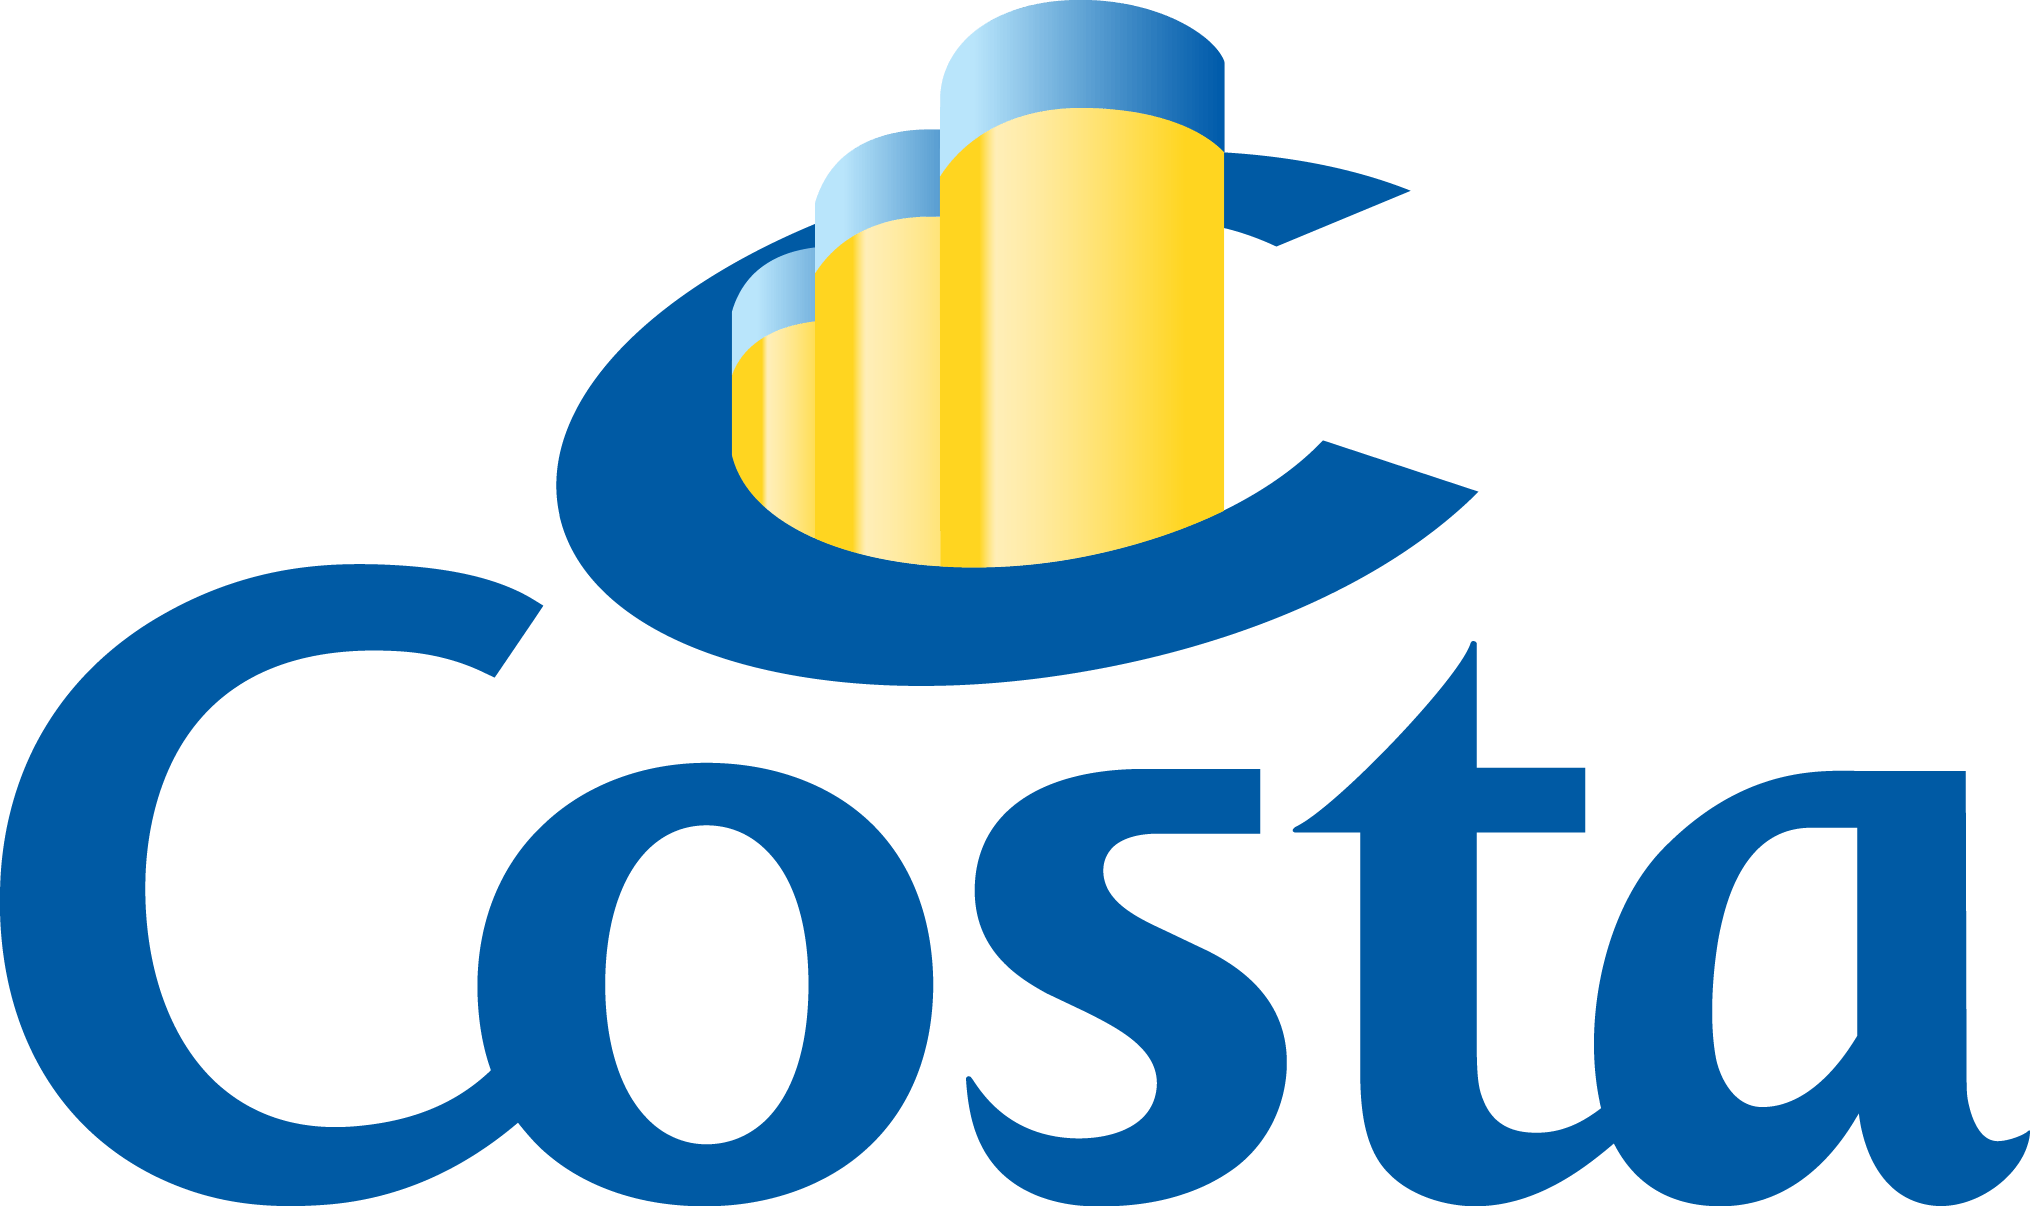 Costa Cruises Logo